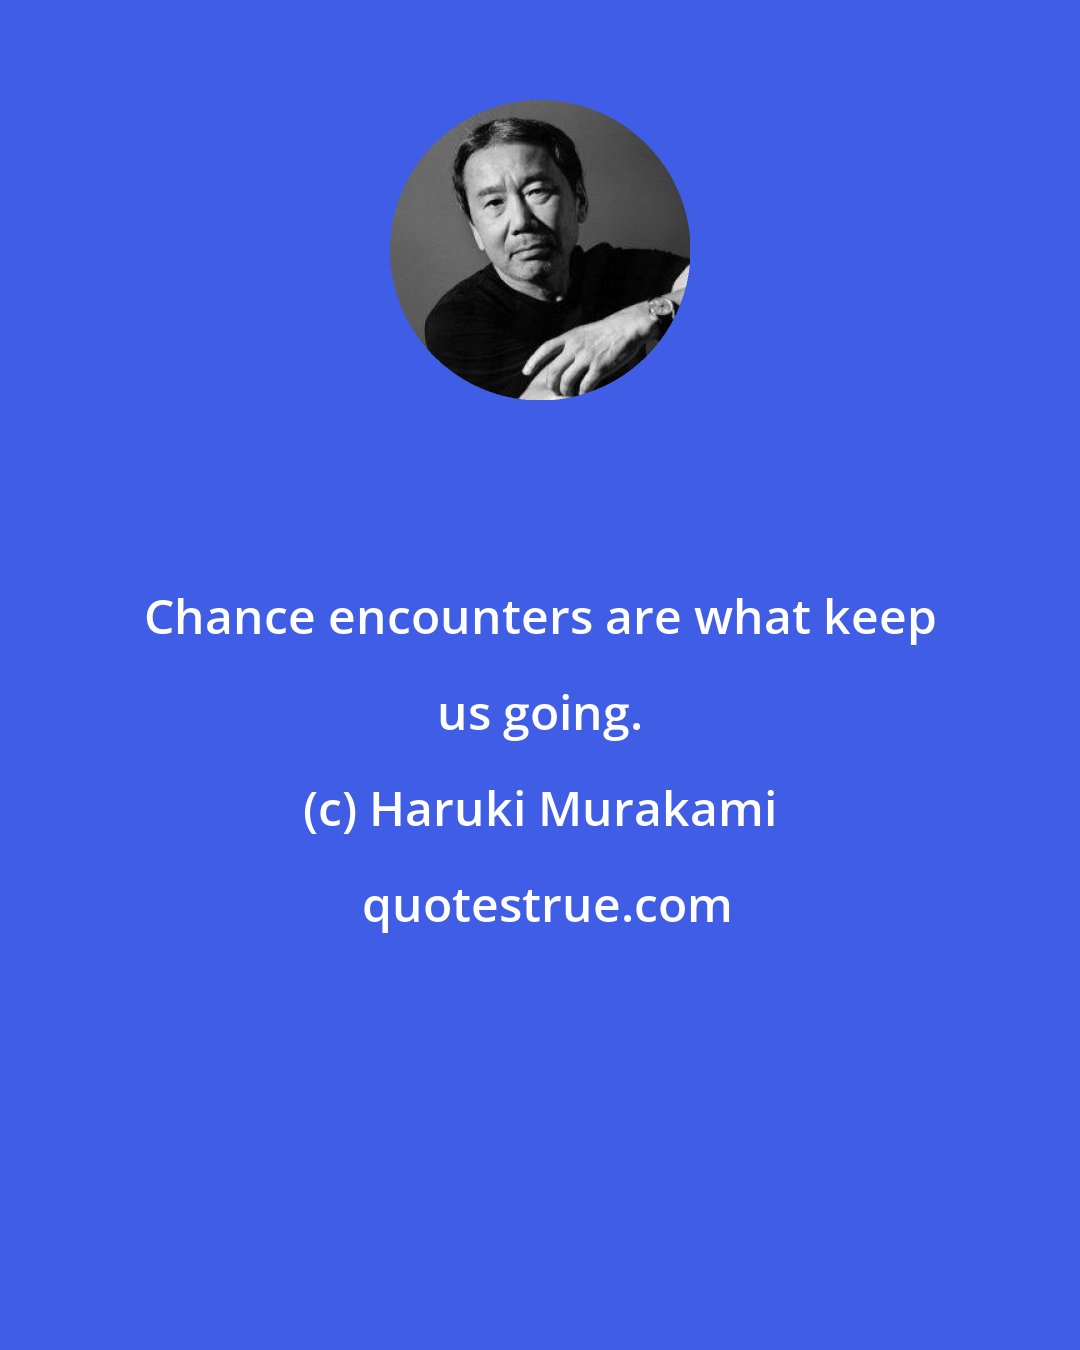 Haruki Murakami: Chance encounters are what keep us going.